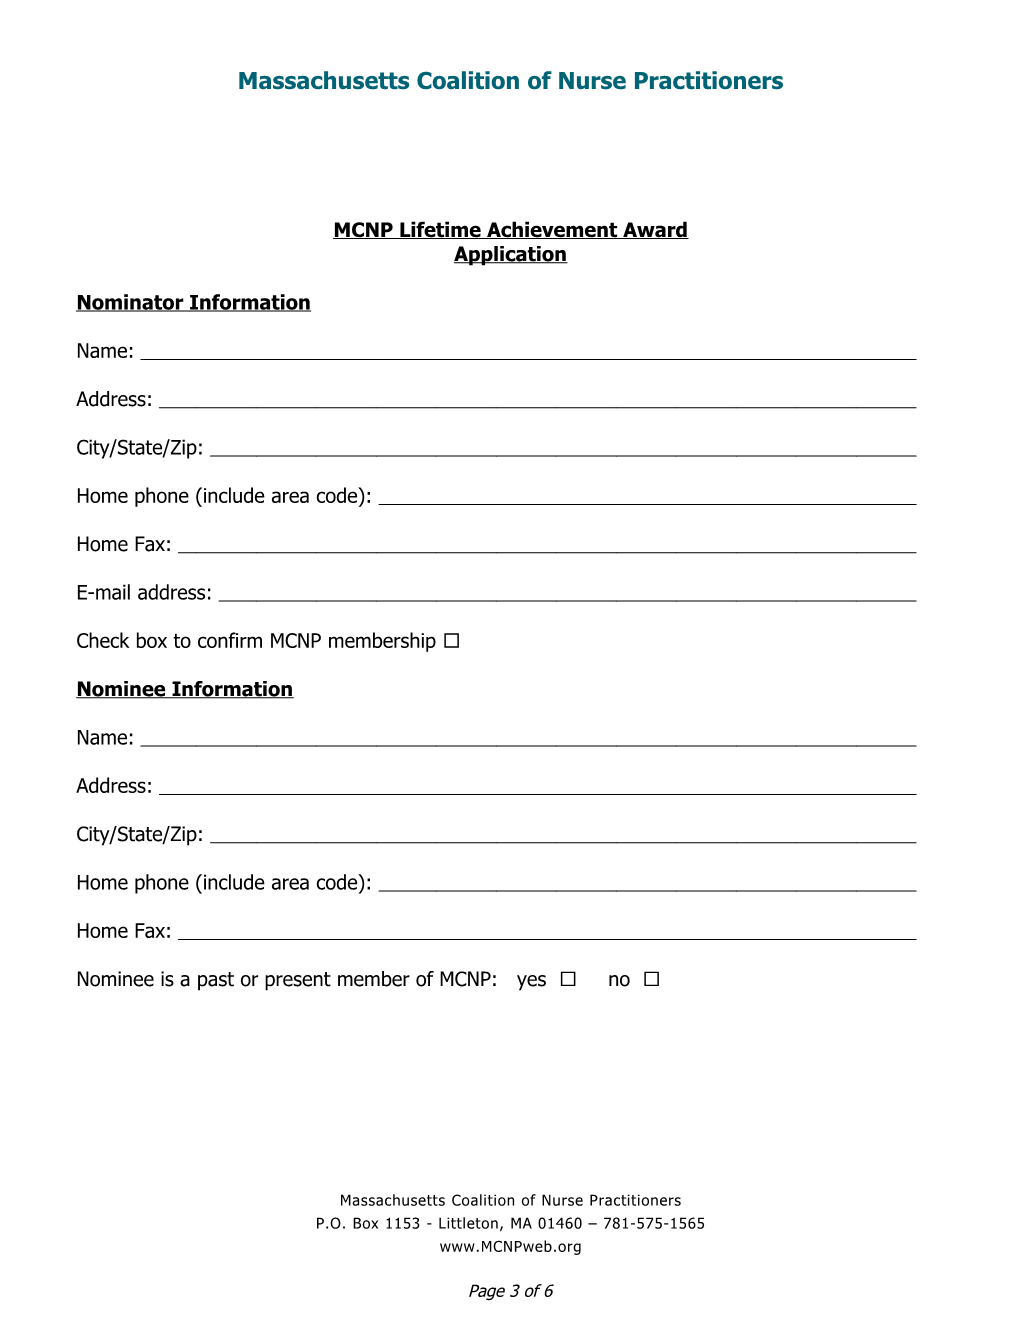 MCNP Lifetime Acheivement Award